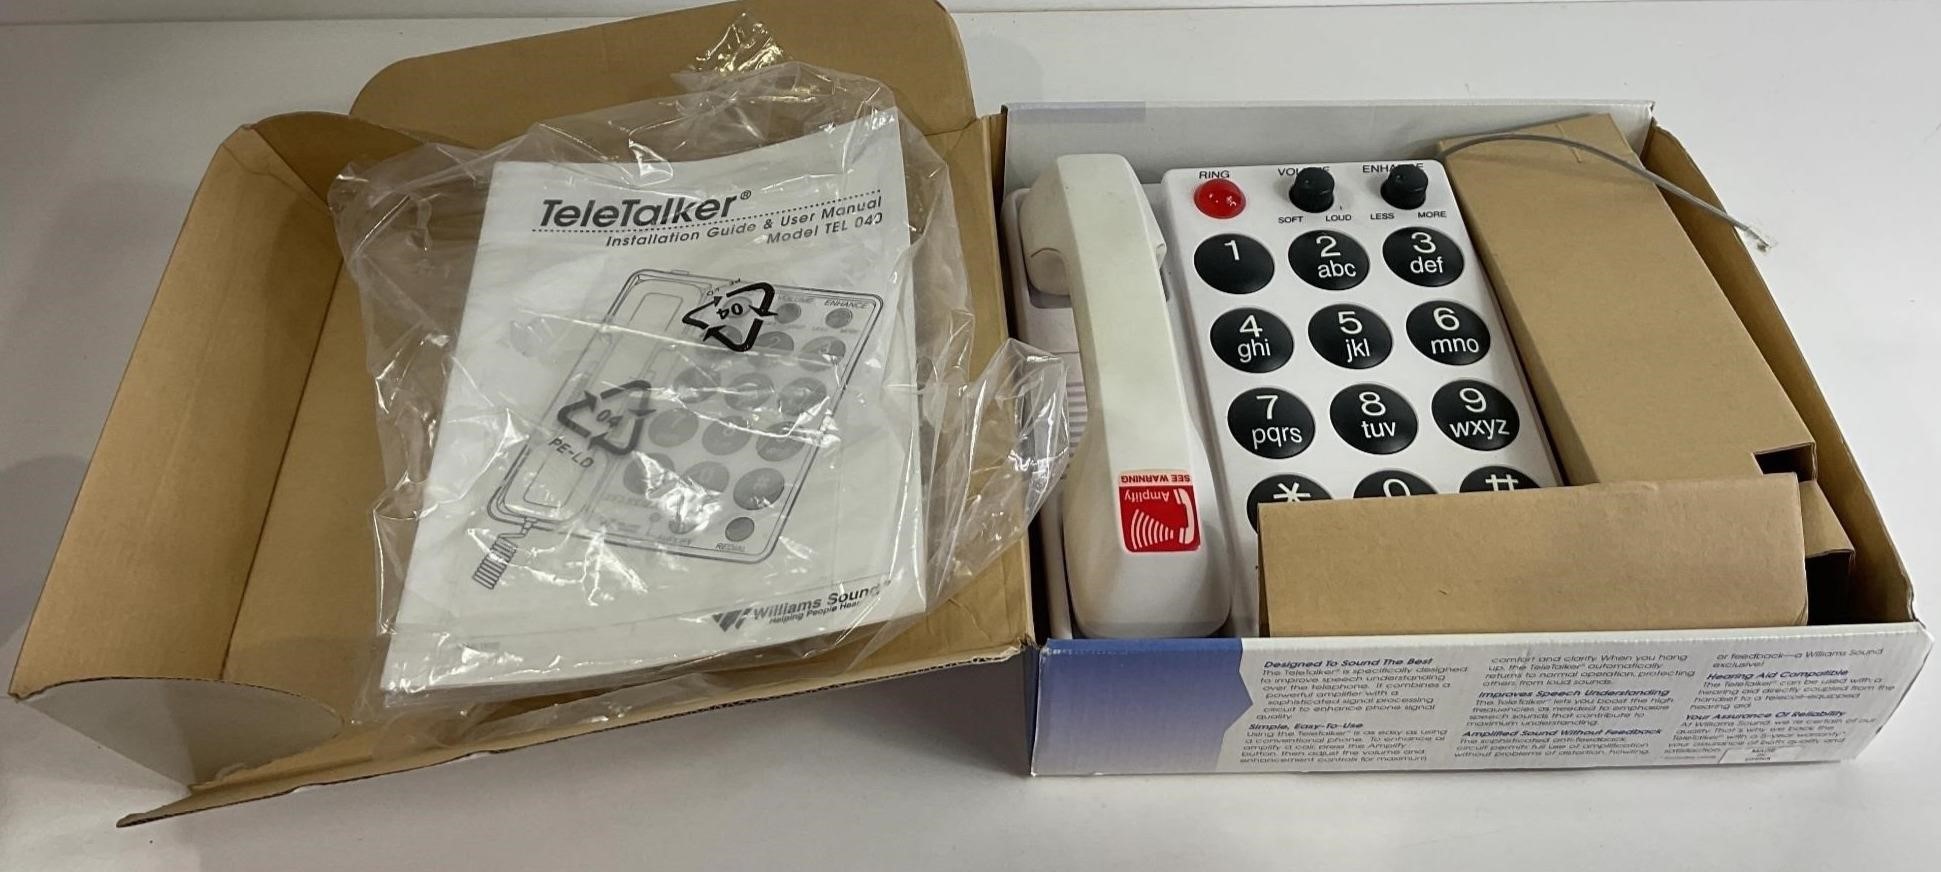 Teletalk Phone With Accessories